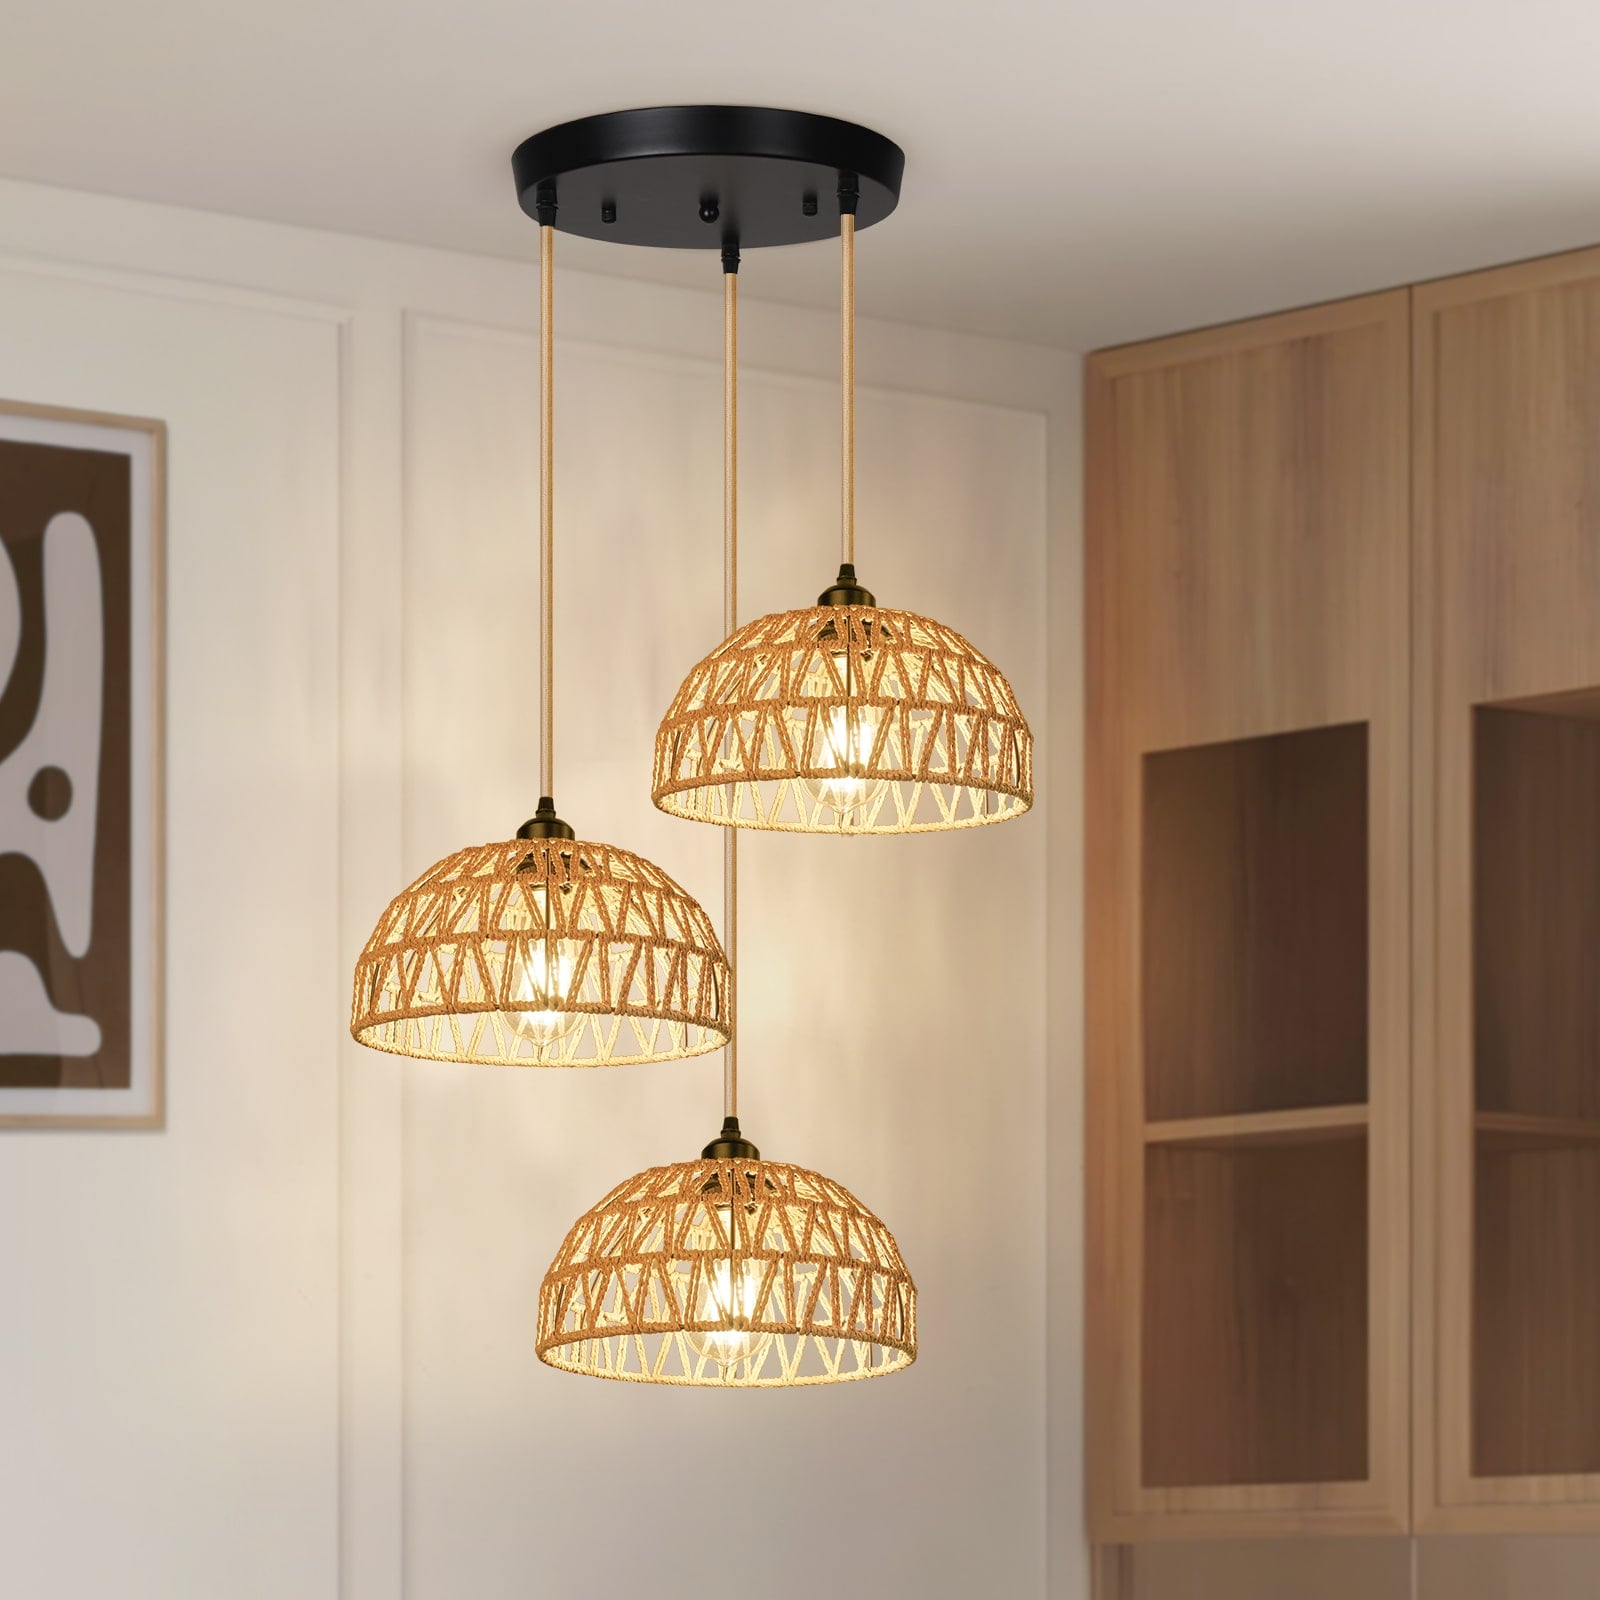 N05 Farmhouse Kitchen Rattan Pendant Lamp 3 Lights Adjustable Length